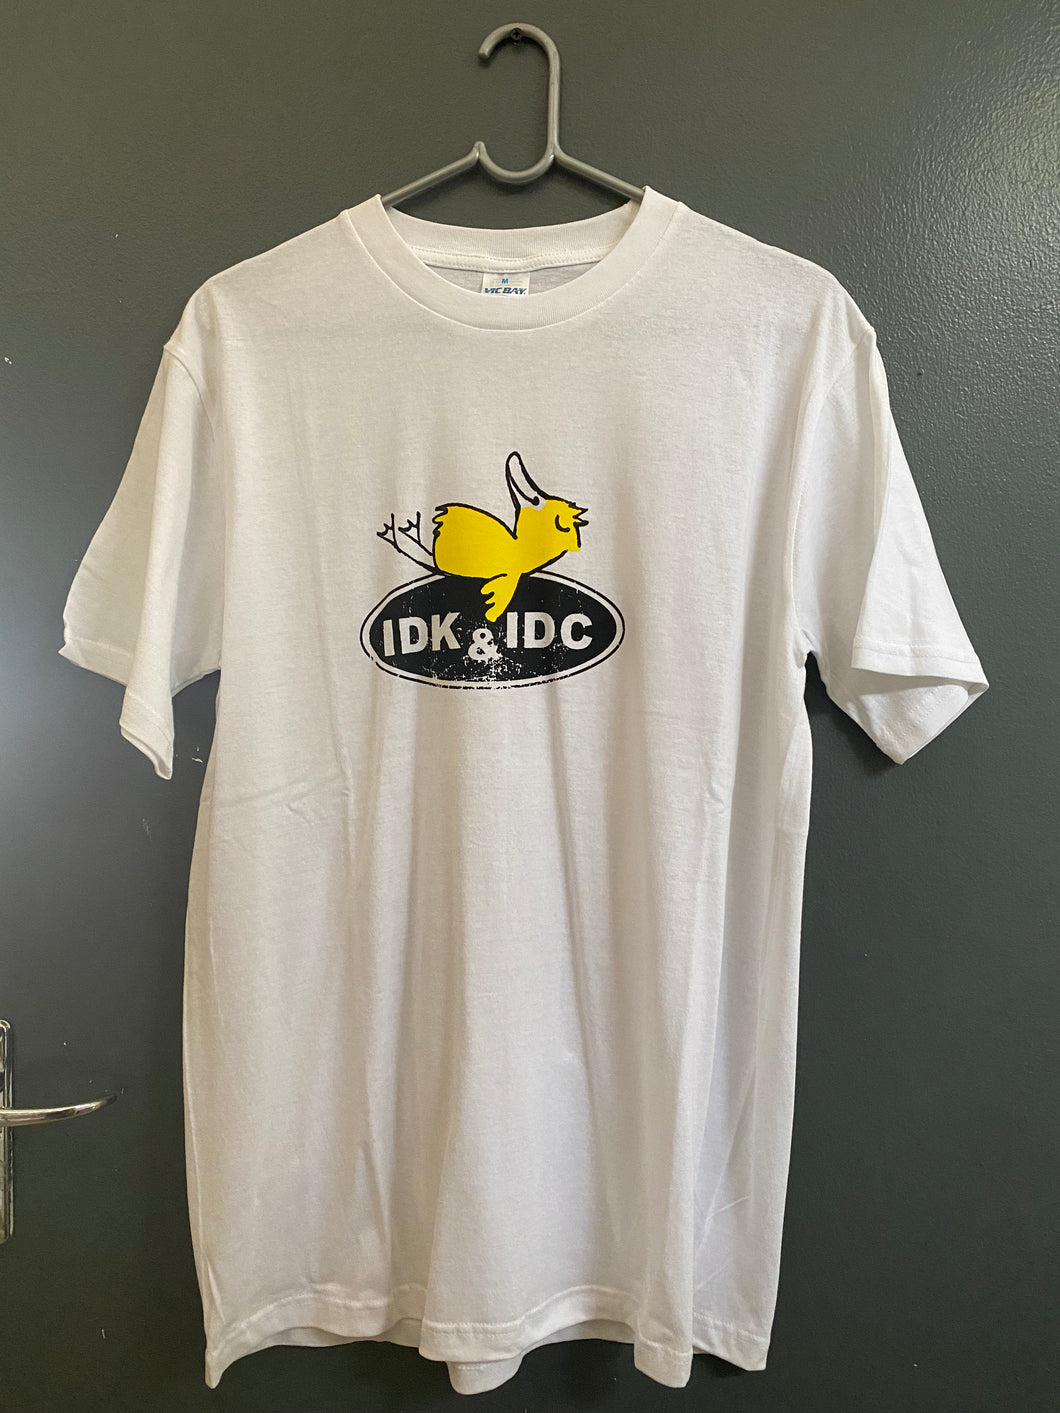 IDK & IDC T-Shirt